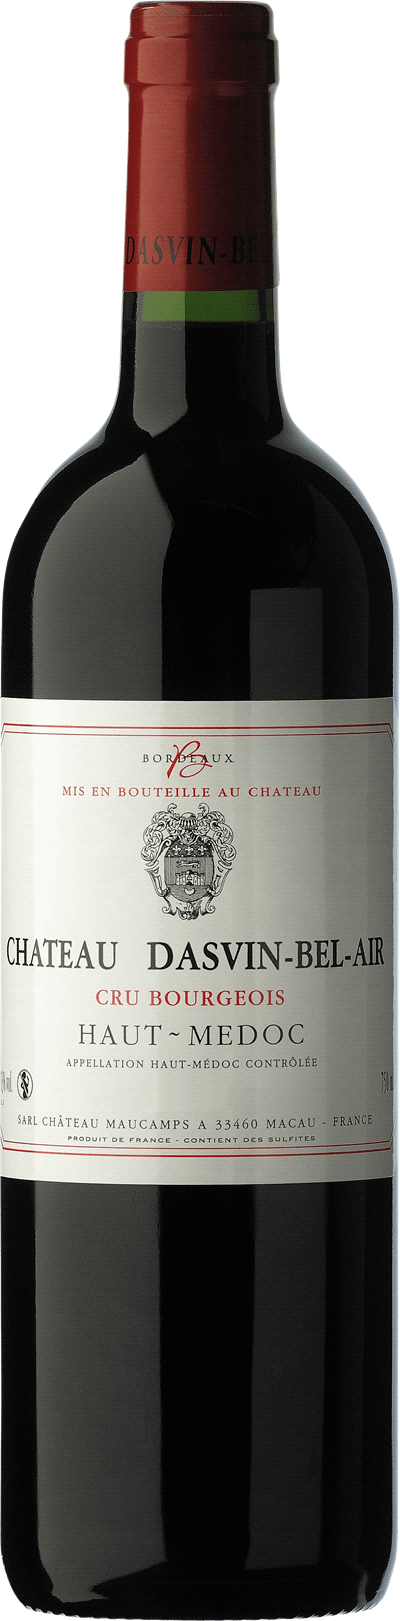 Château Dasvin Belair Cru Bourgeoise